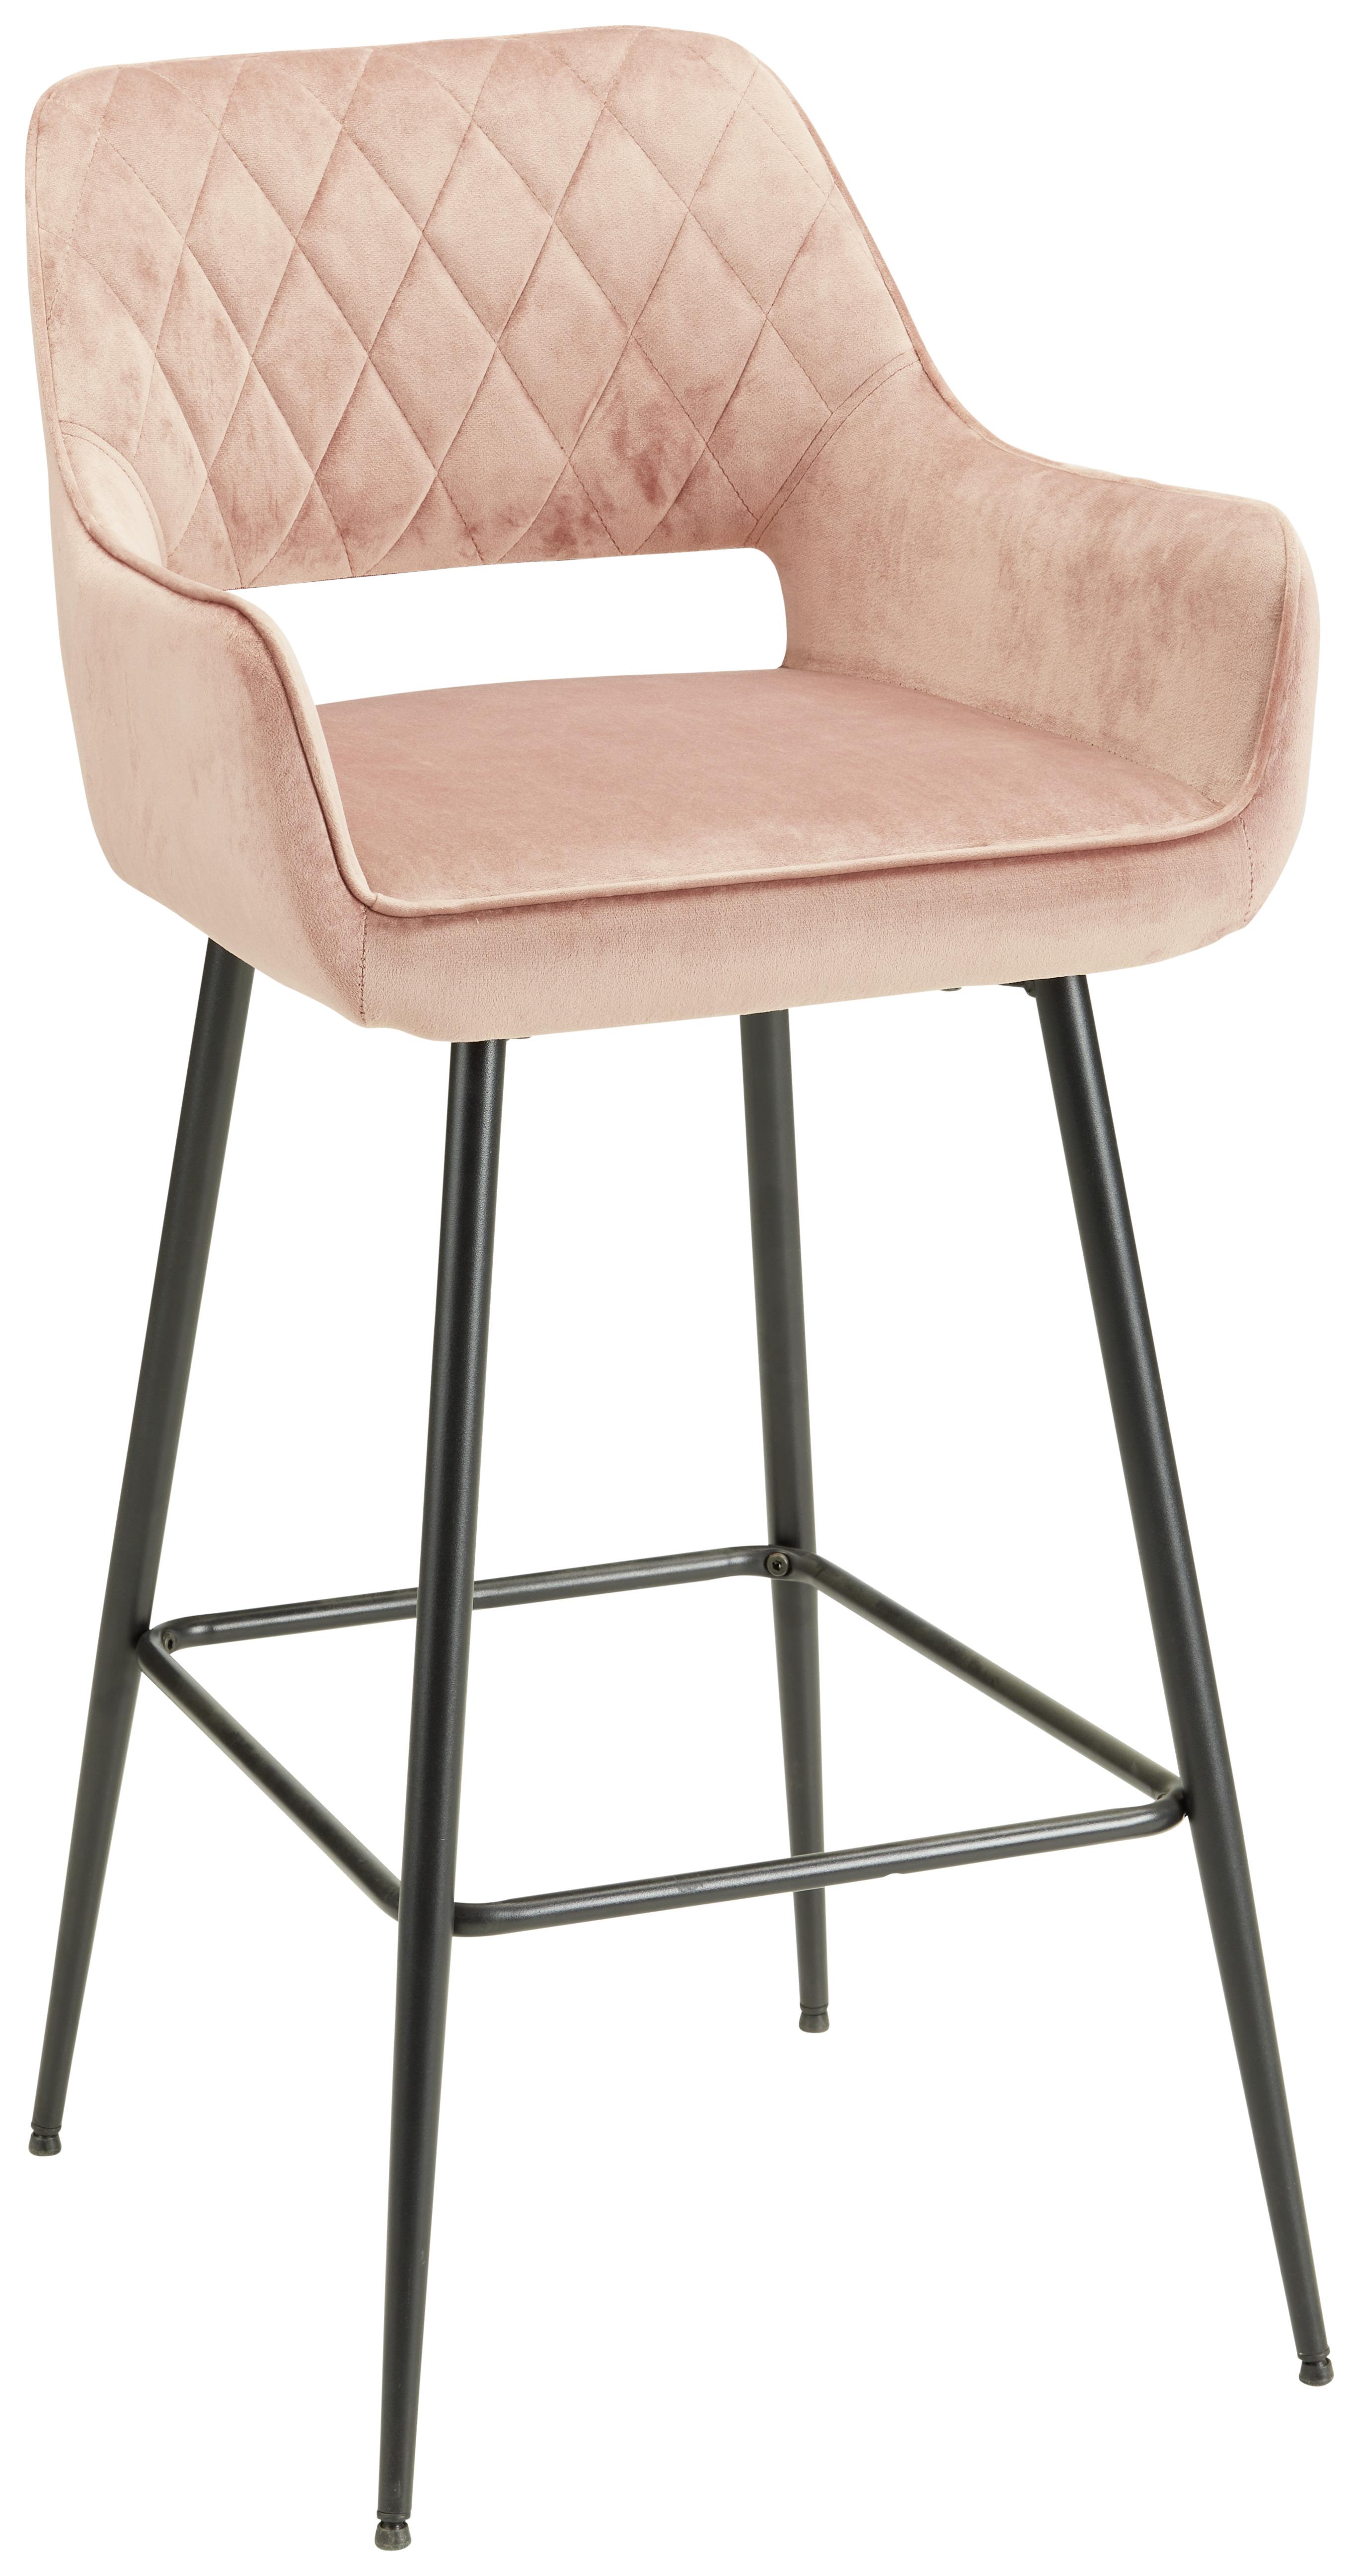 Barska Stolica Serafina - ružičasta/crna, Modern, metal/tekstil (54/105/60cm) - Modern Living